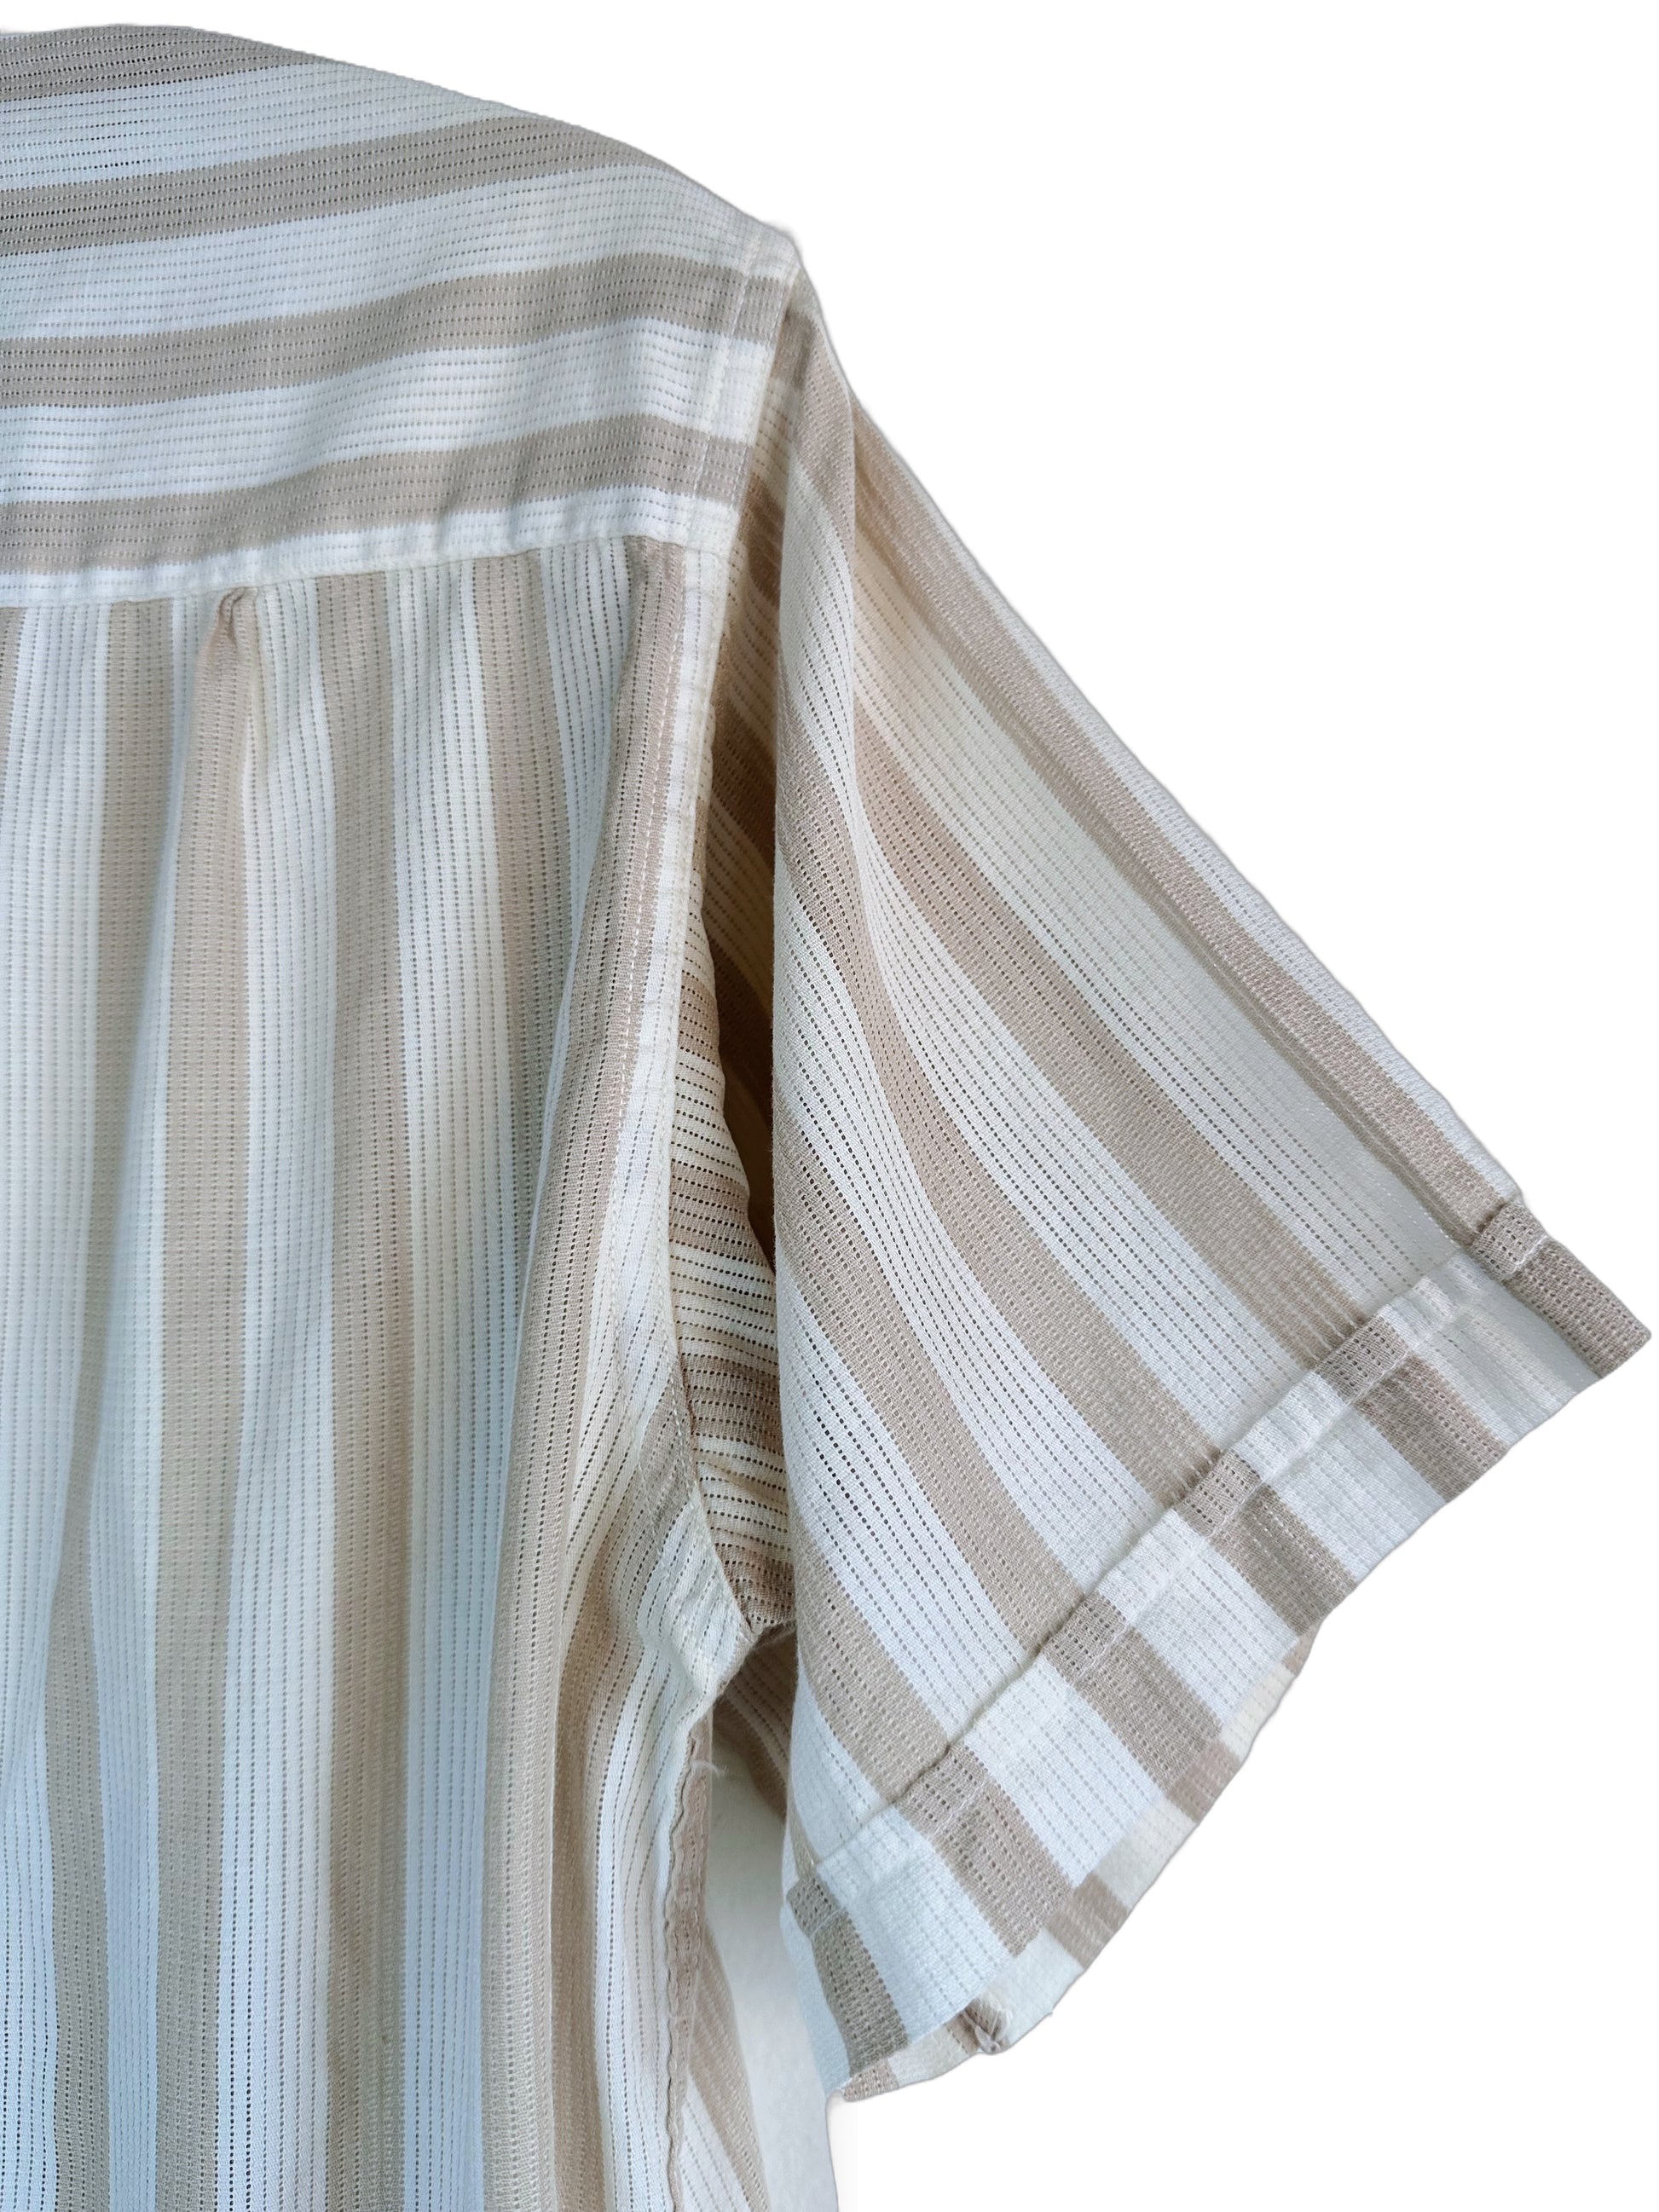 folded seam , mesh like fabric detail 